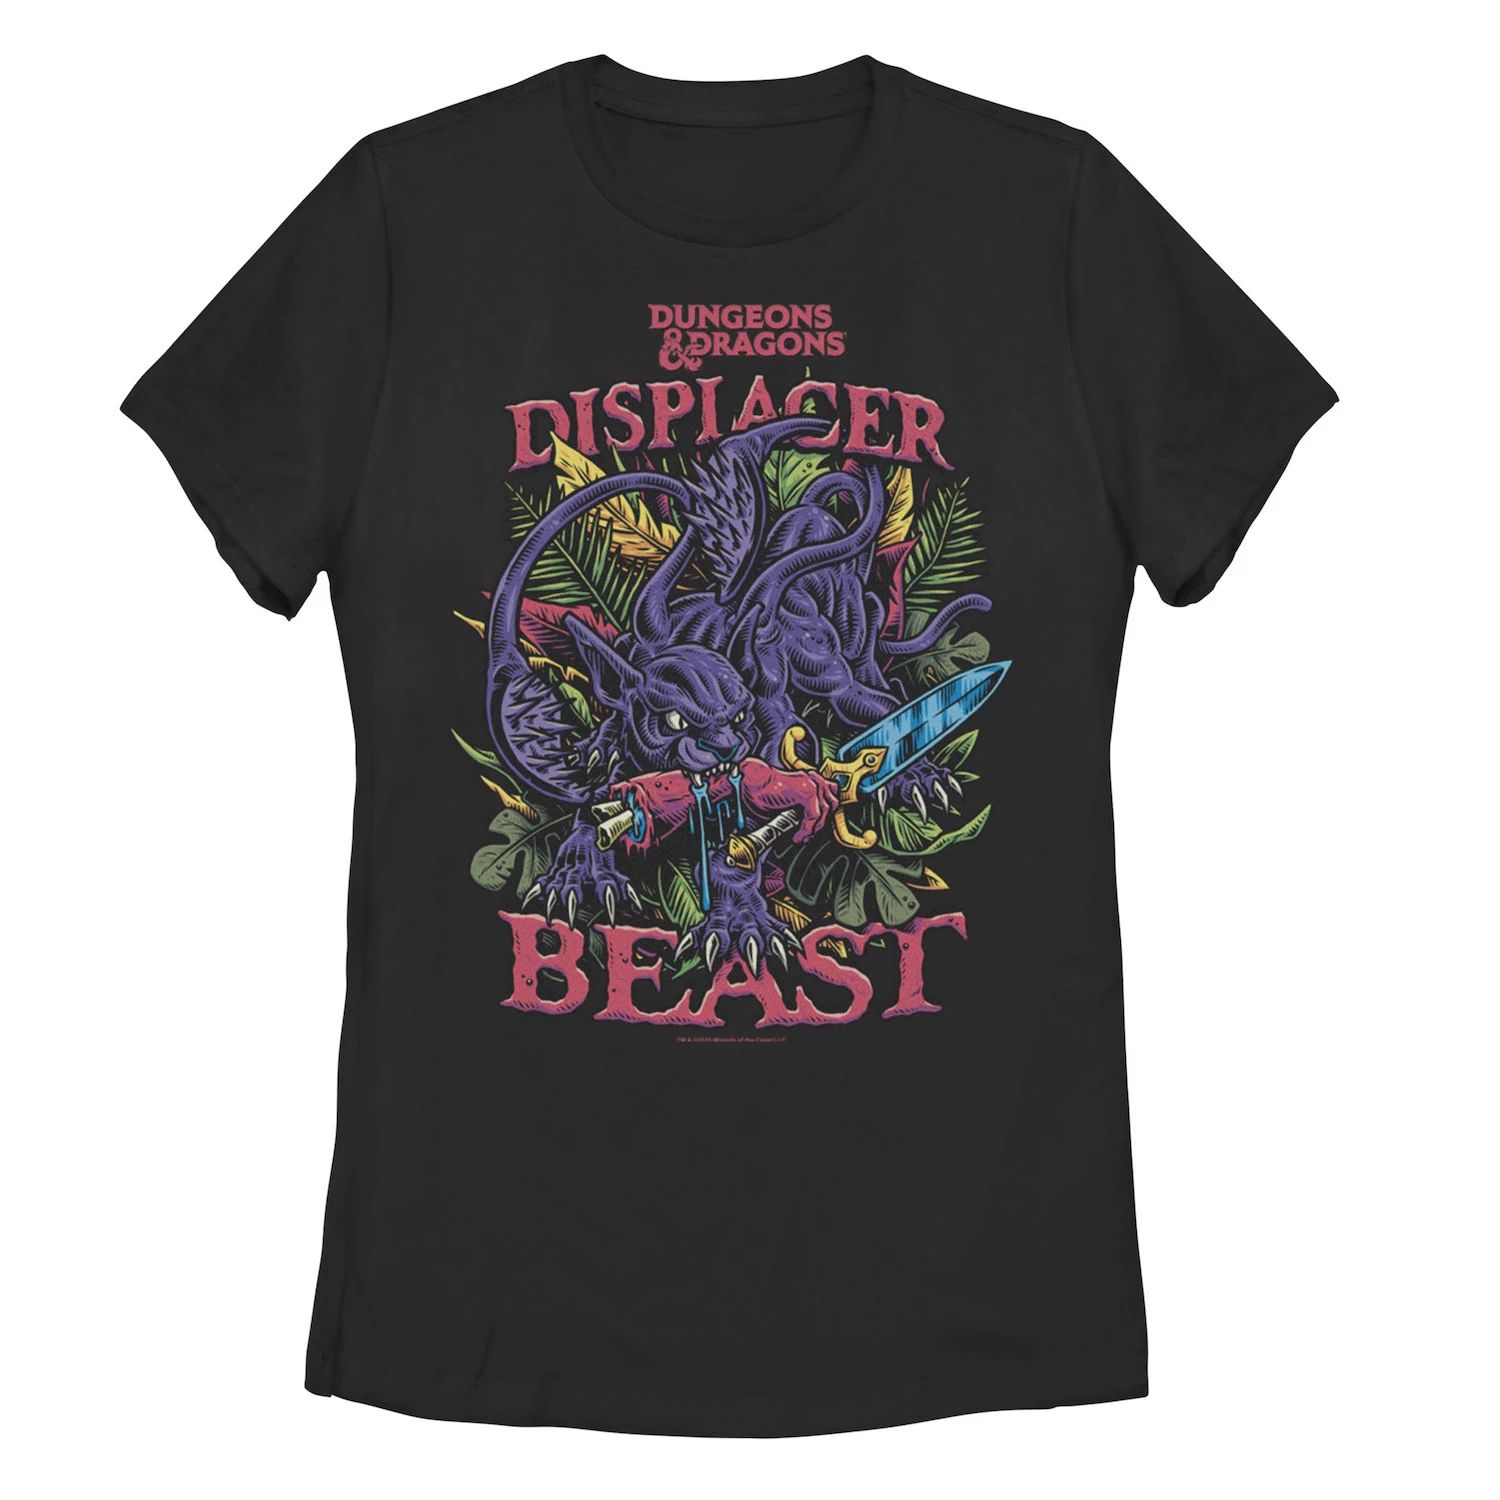 Футболка Displacer Beast с рисунком Dungeons & Dragons для юниоров Licensed Character